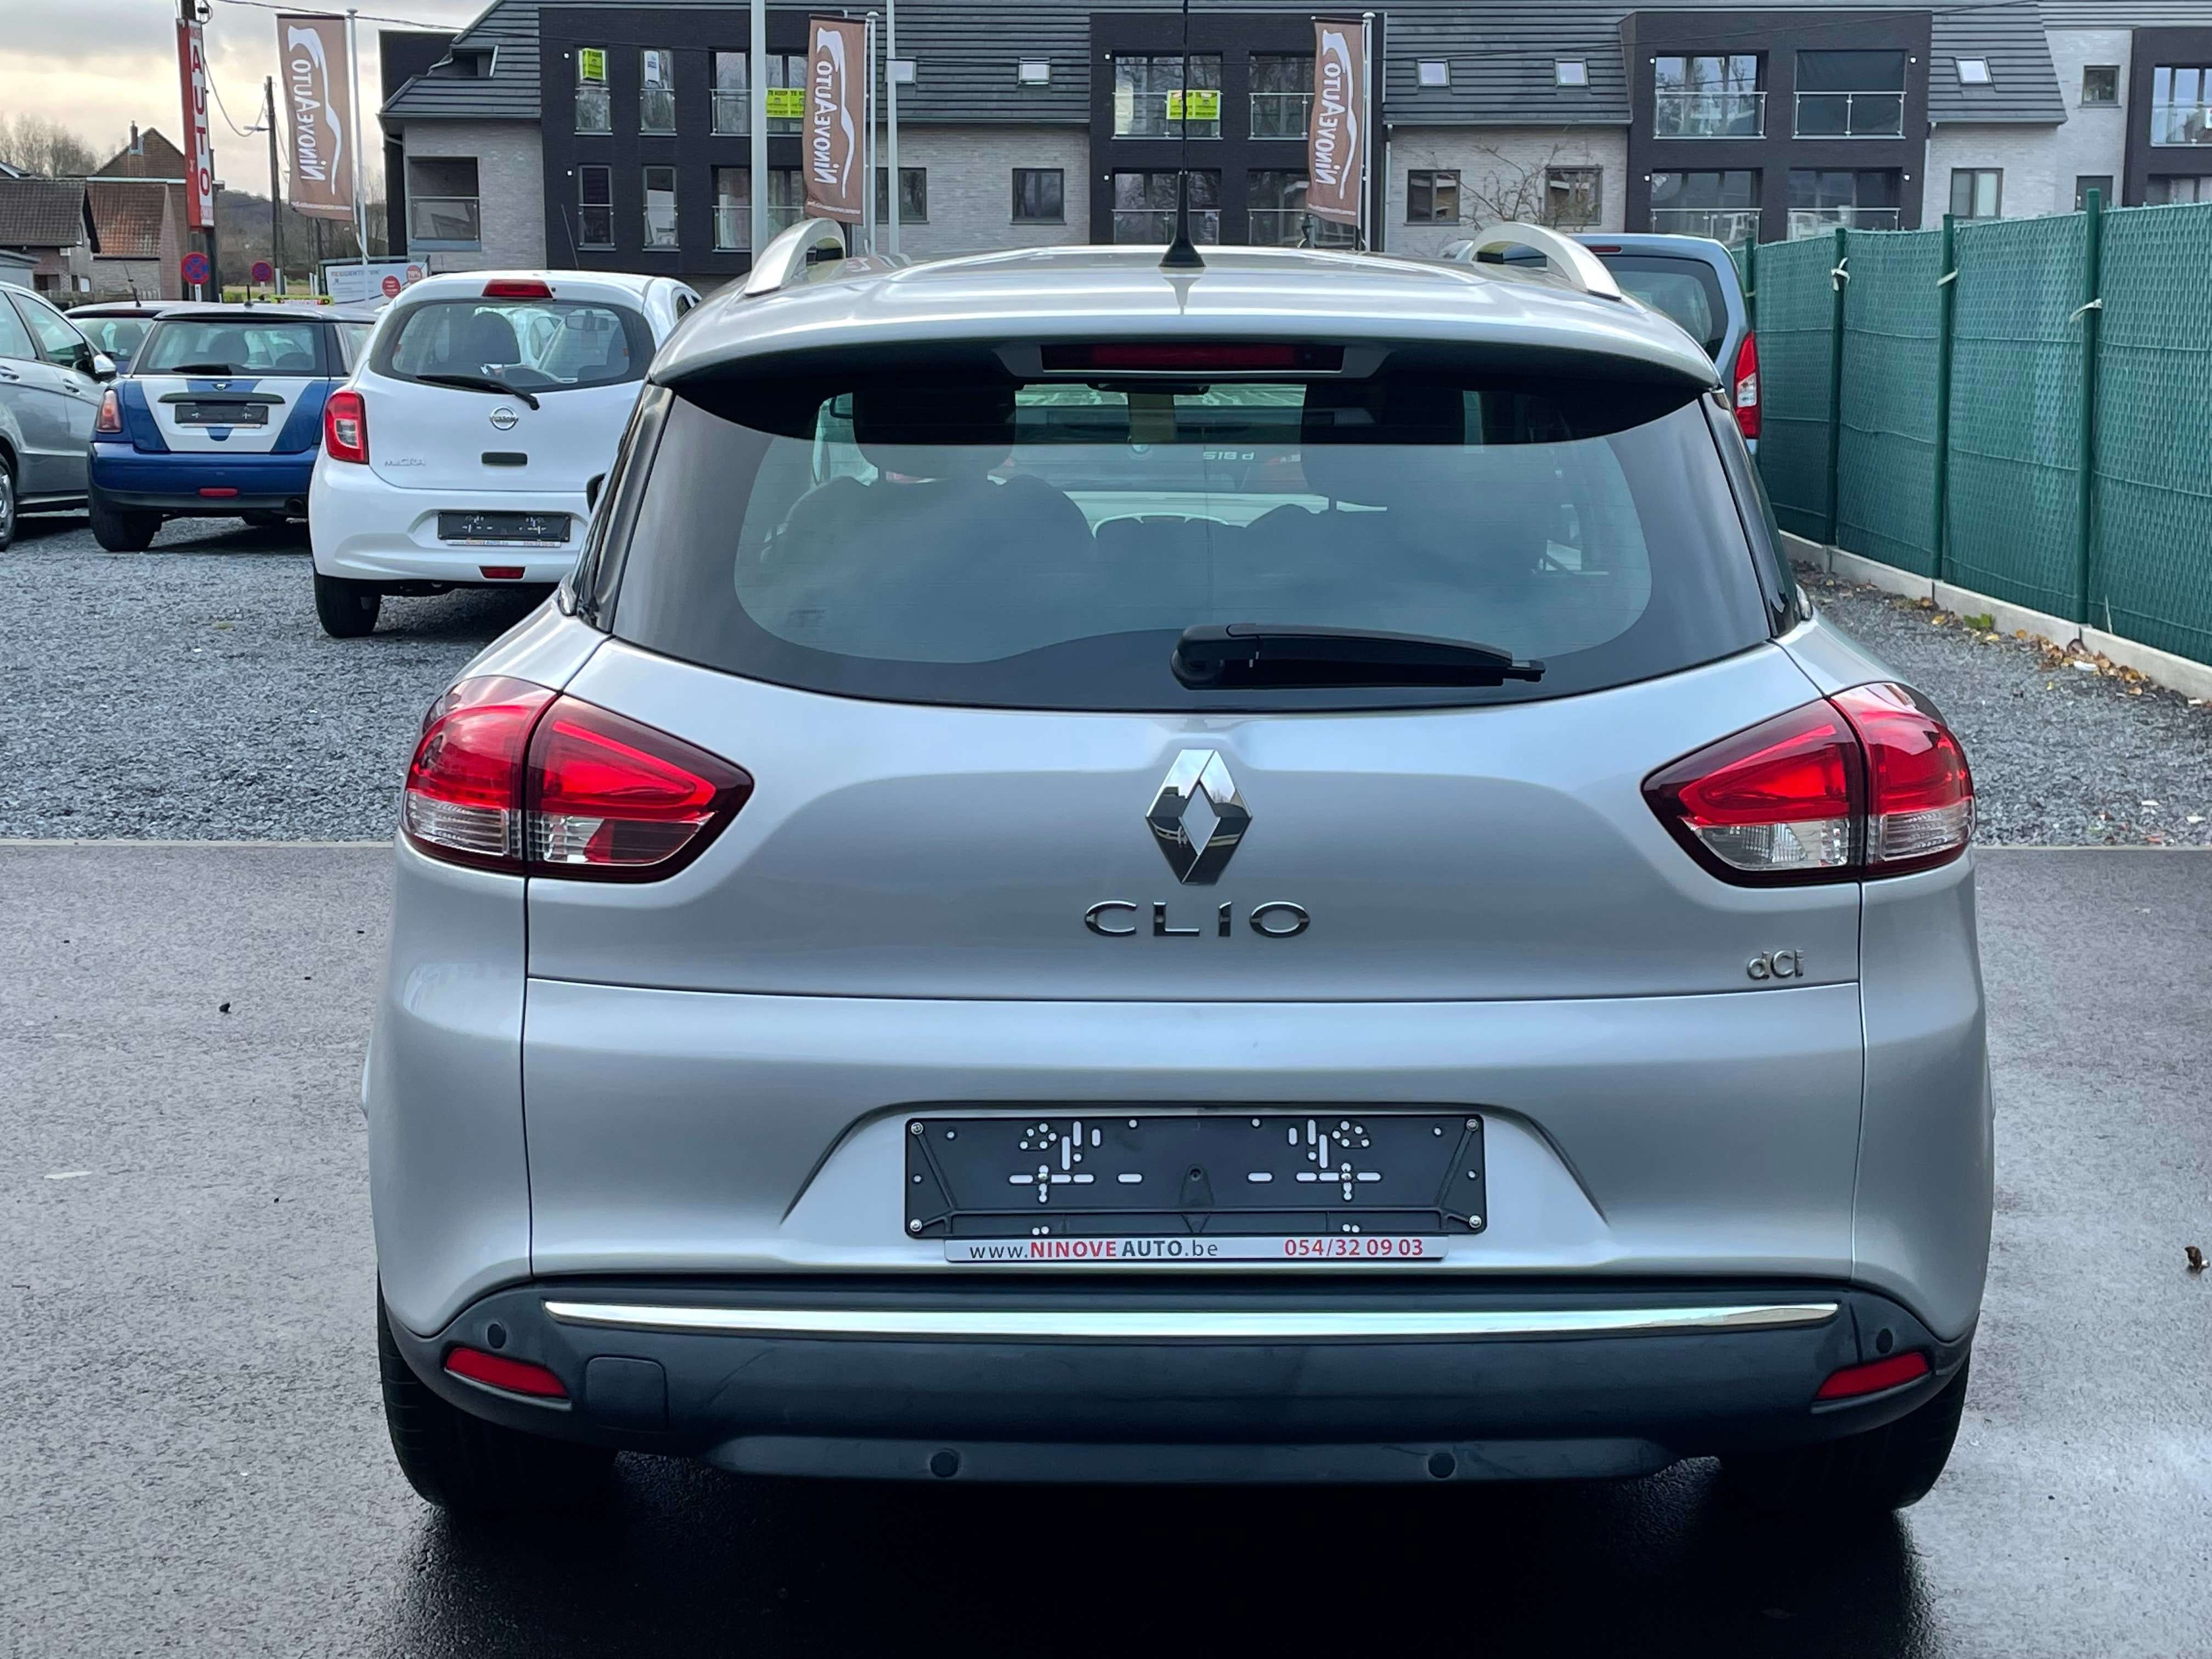 Ninove auto - Renault Clio